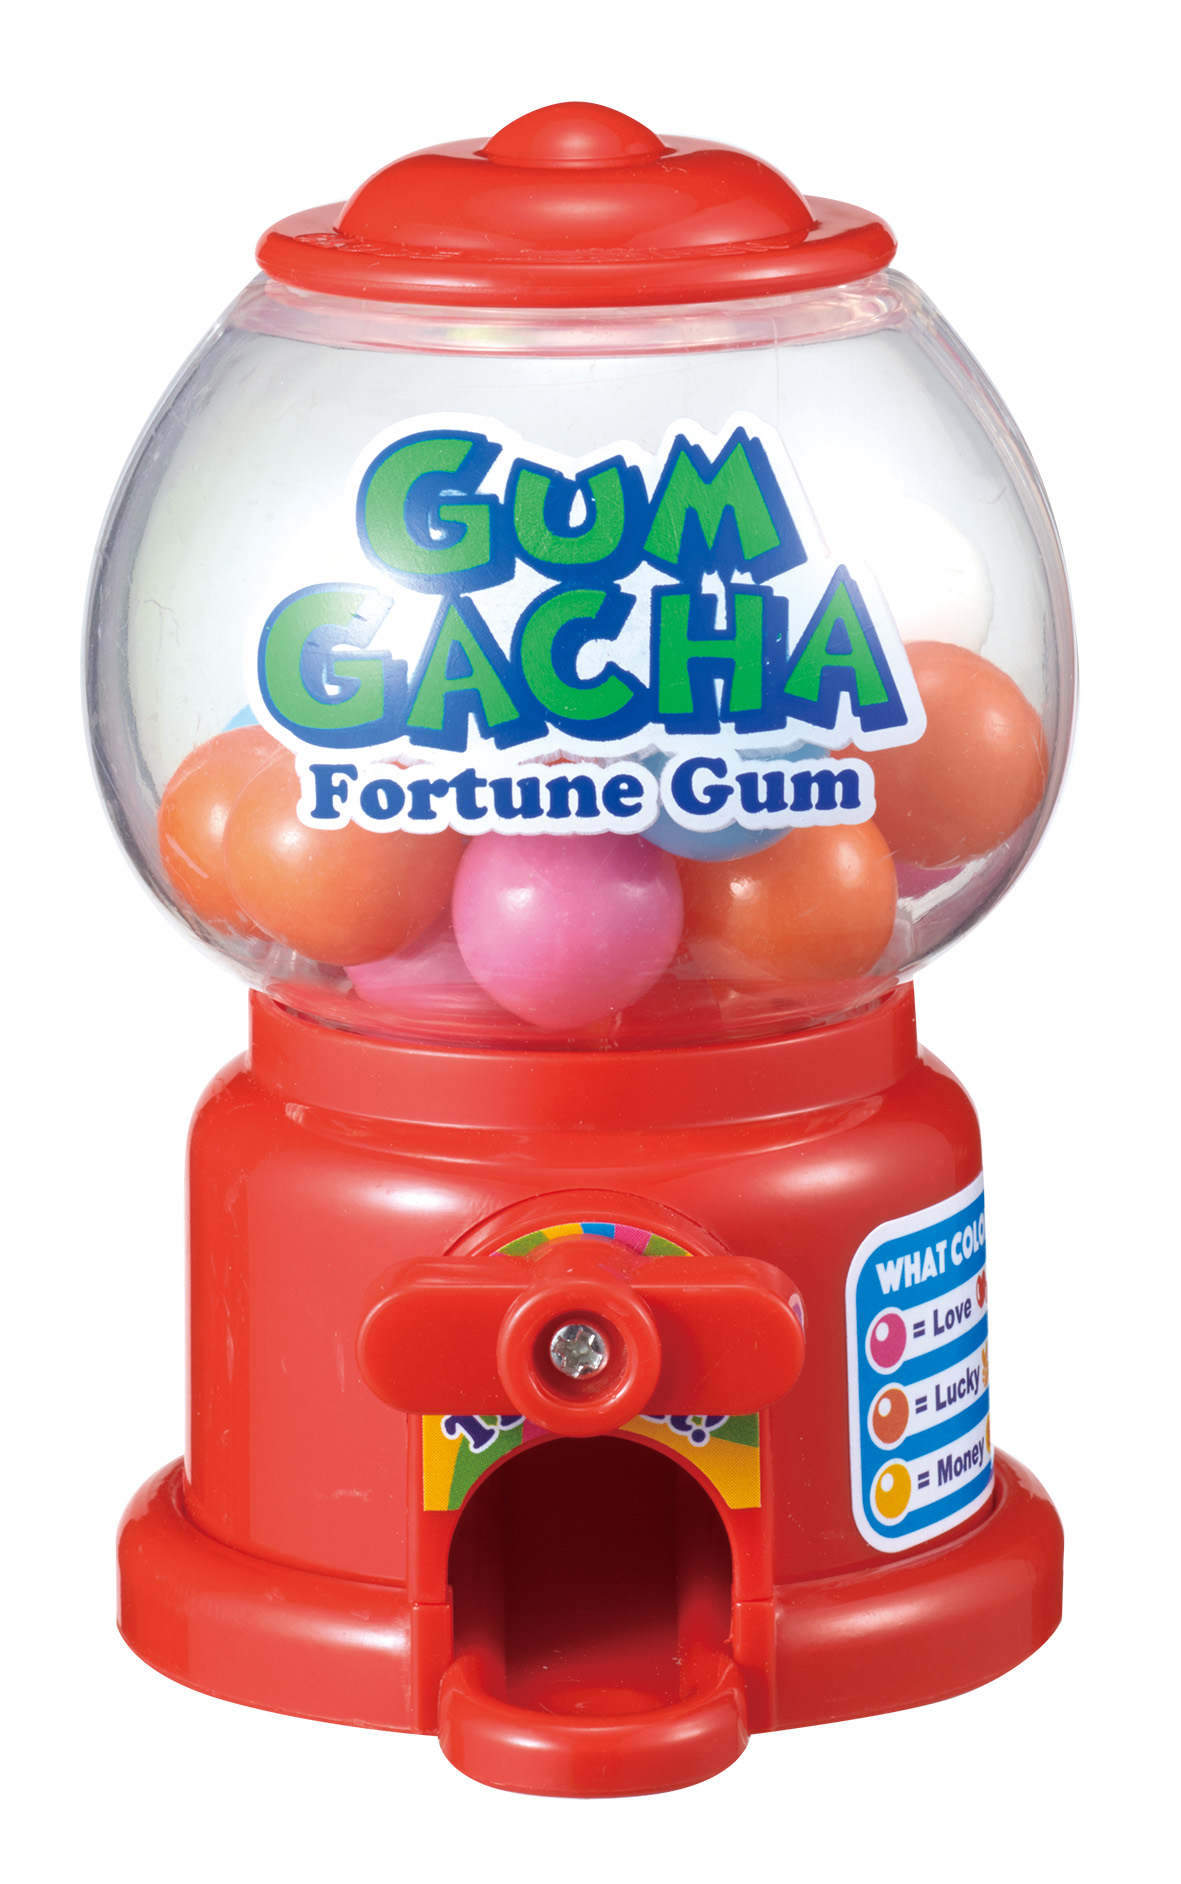 Toy x Candy Combi - Gum gacha